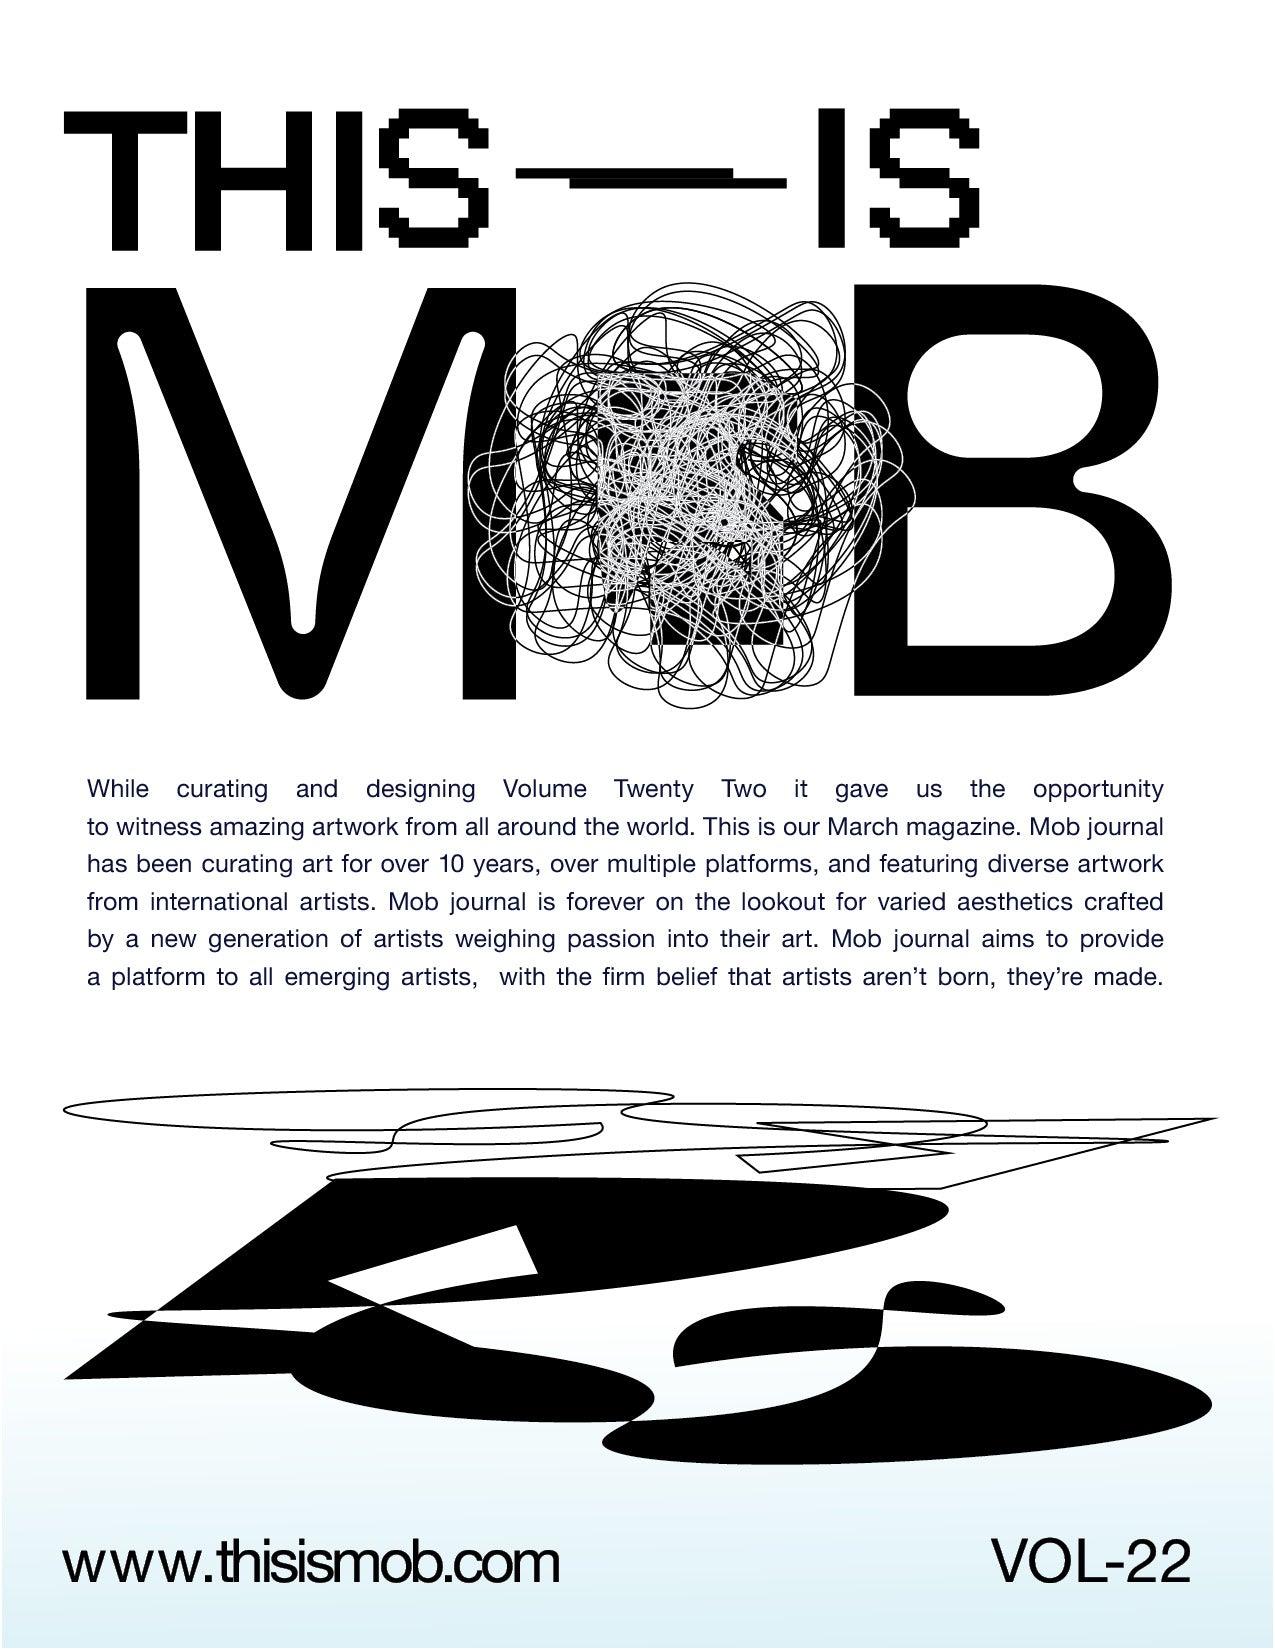 MOB JOURNAL | VOLUME TWENTY TWO | ISSUE #24 - Mob Journal